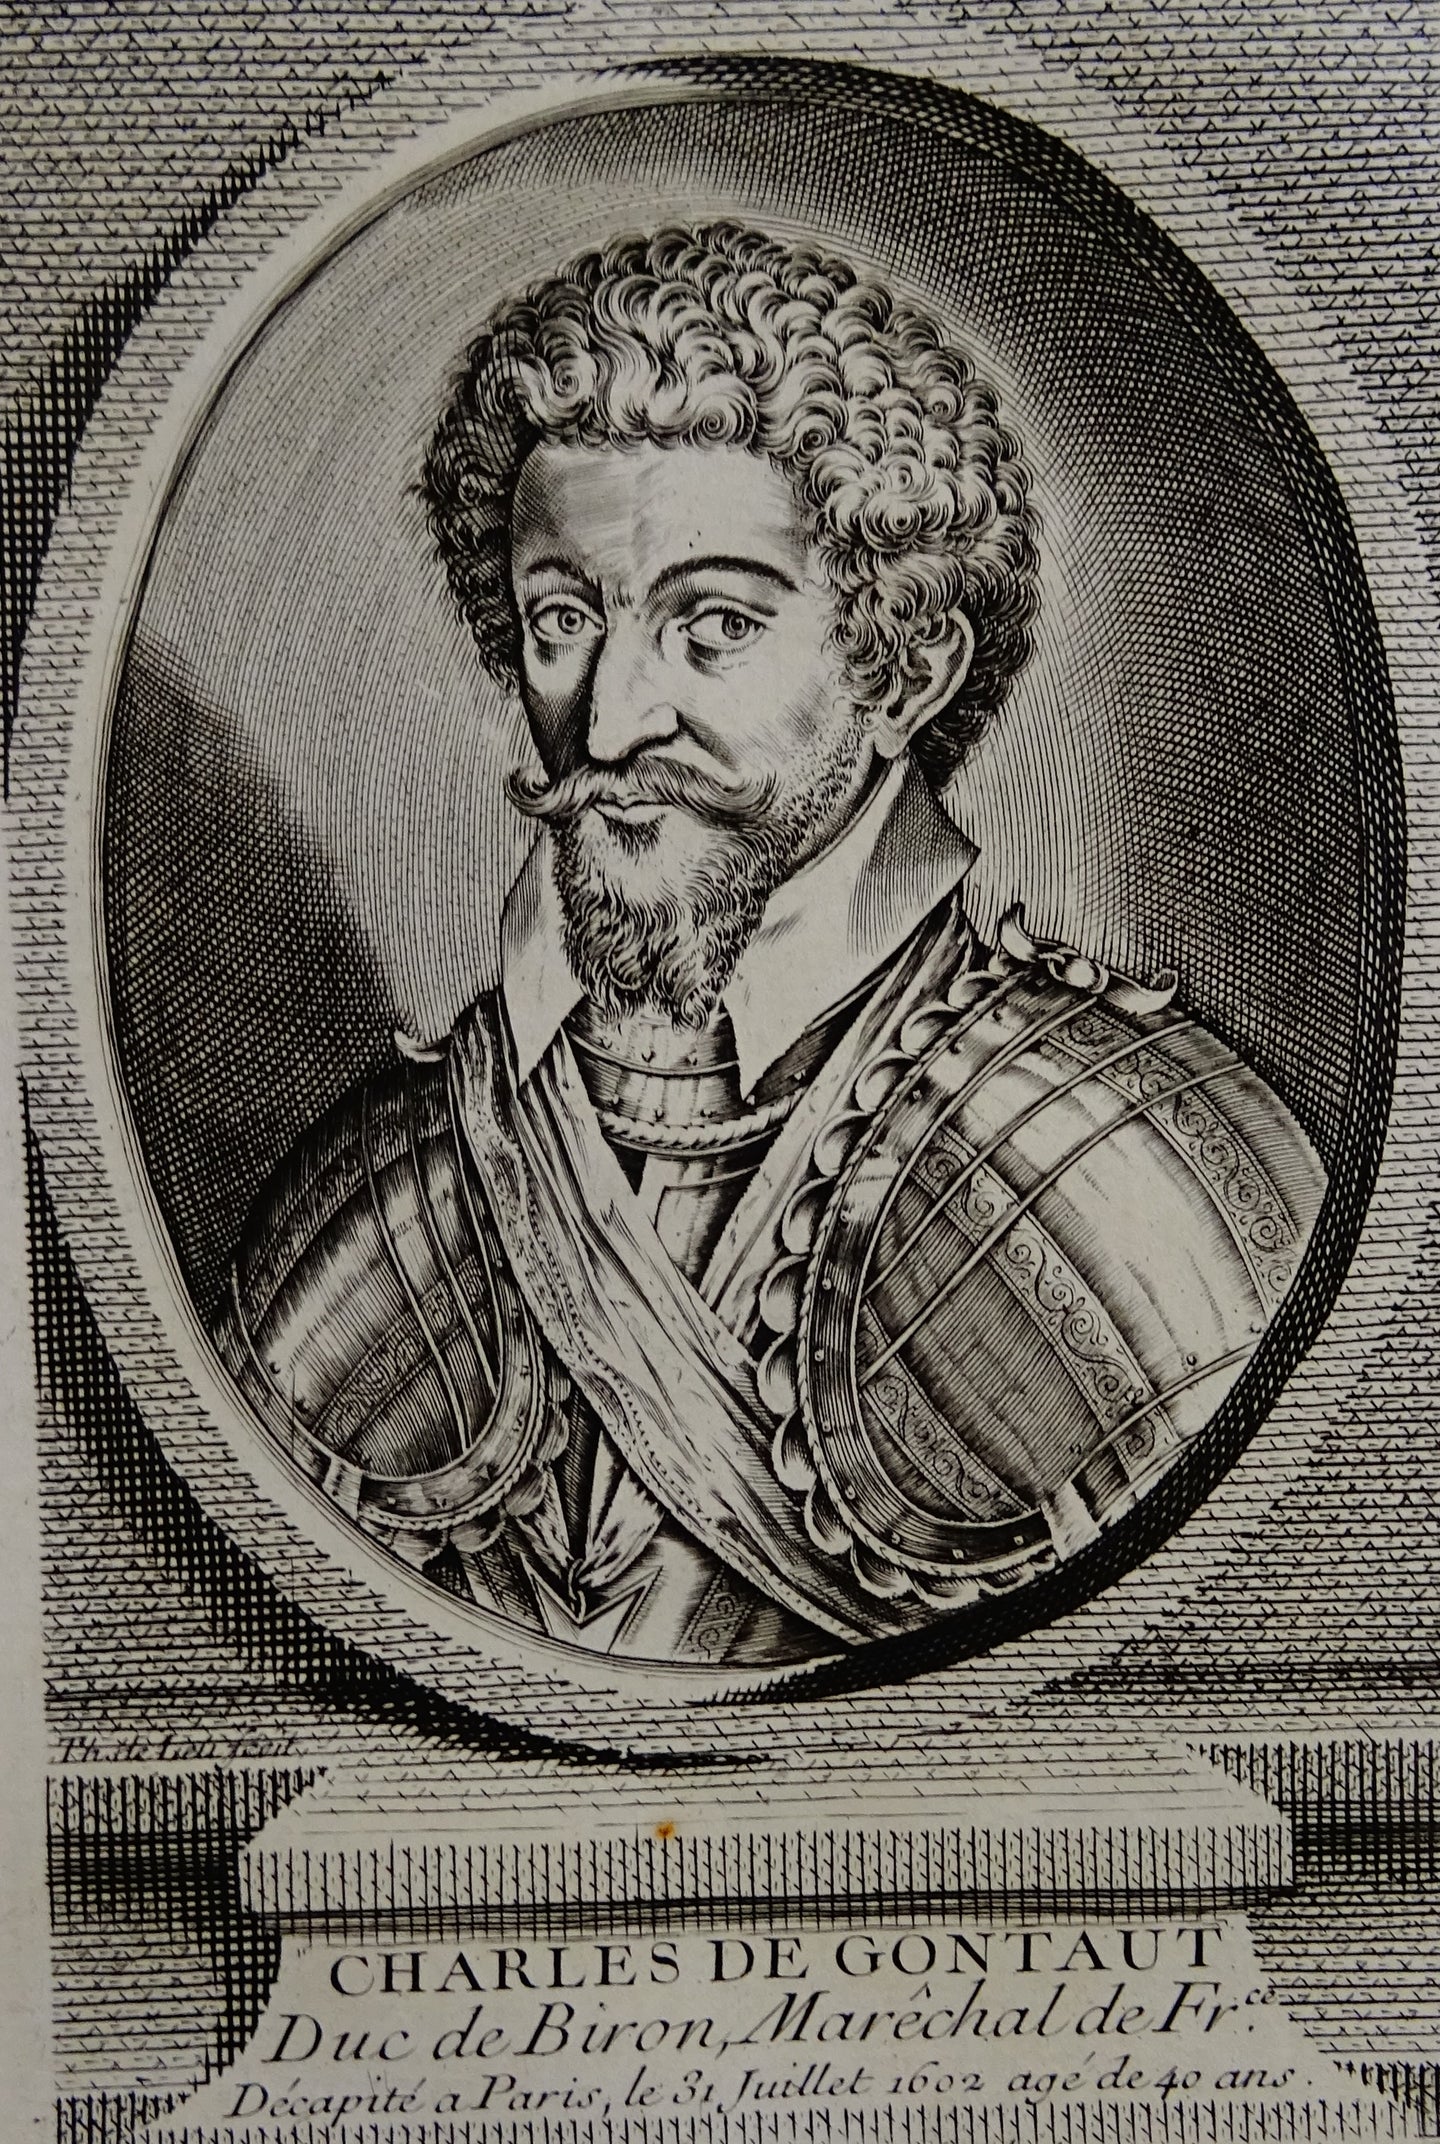 Charles de Contaut